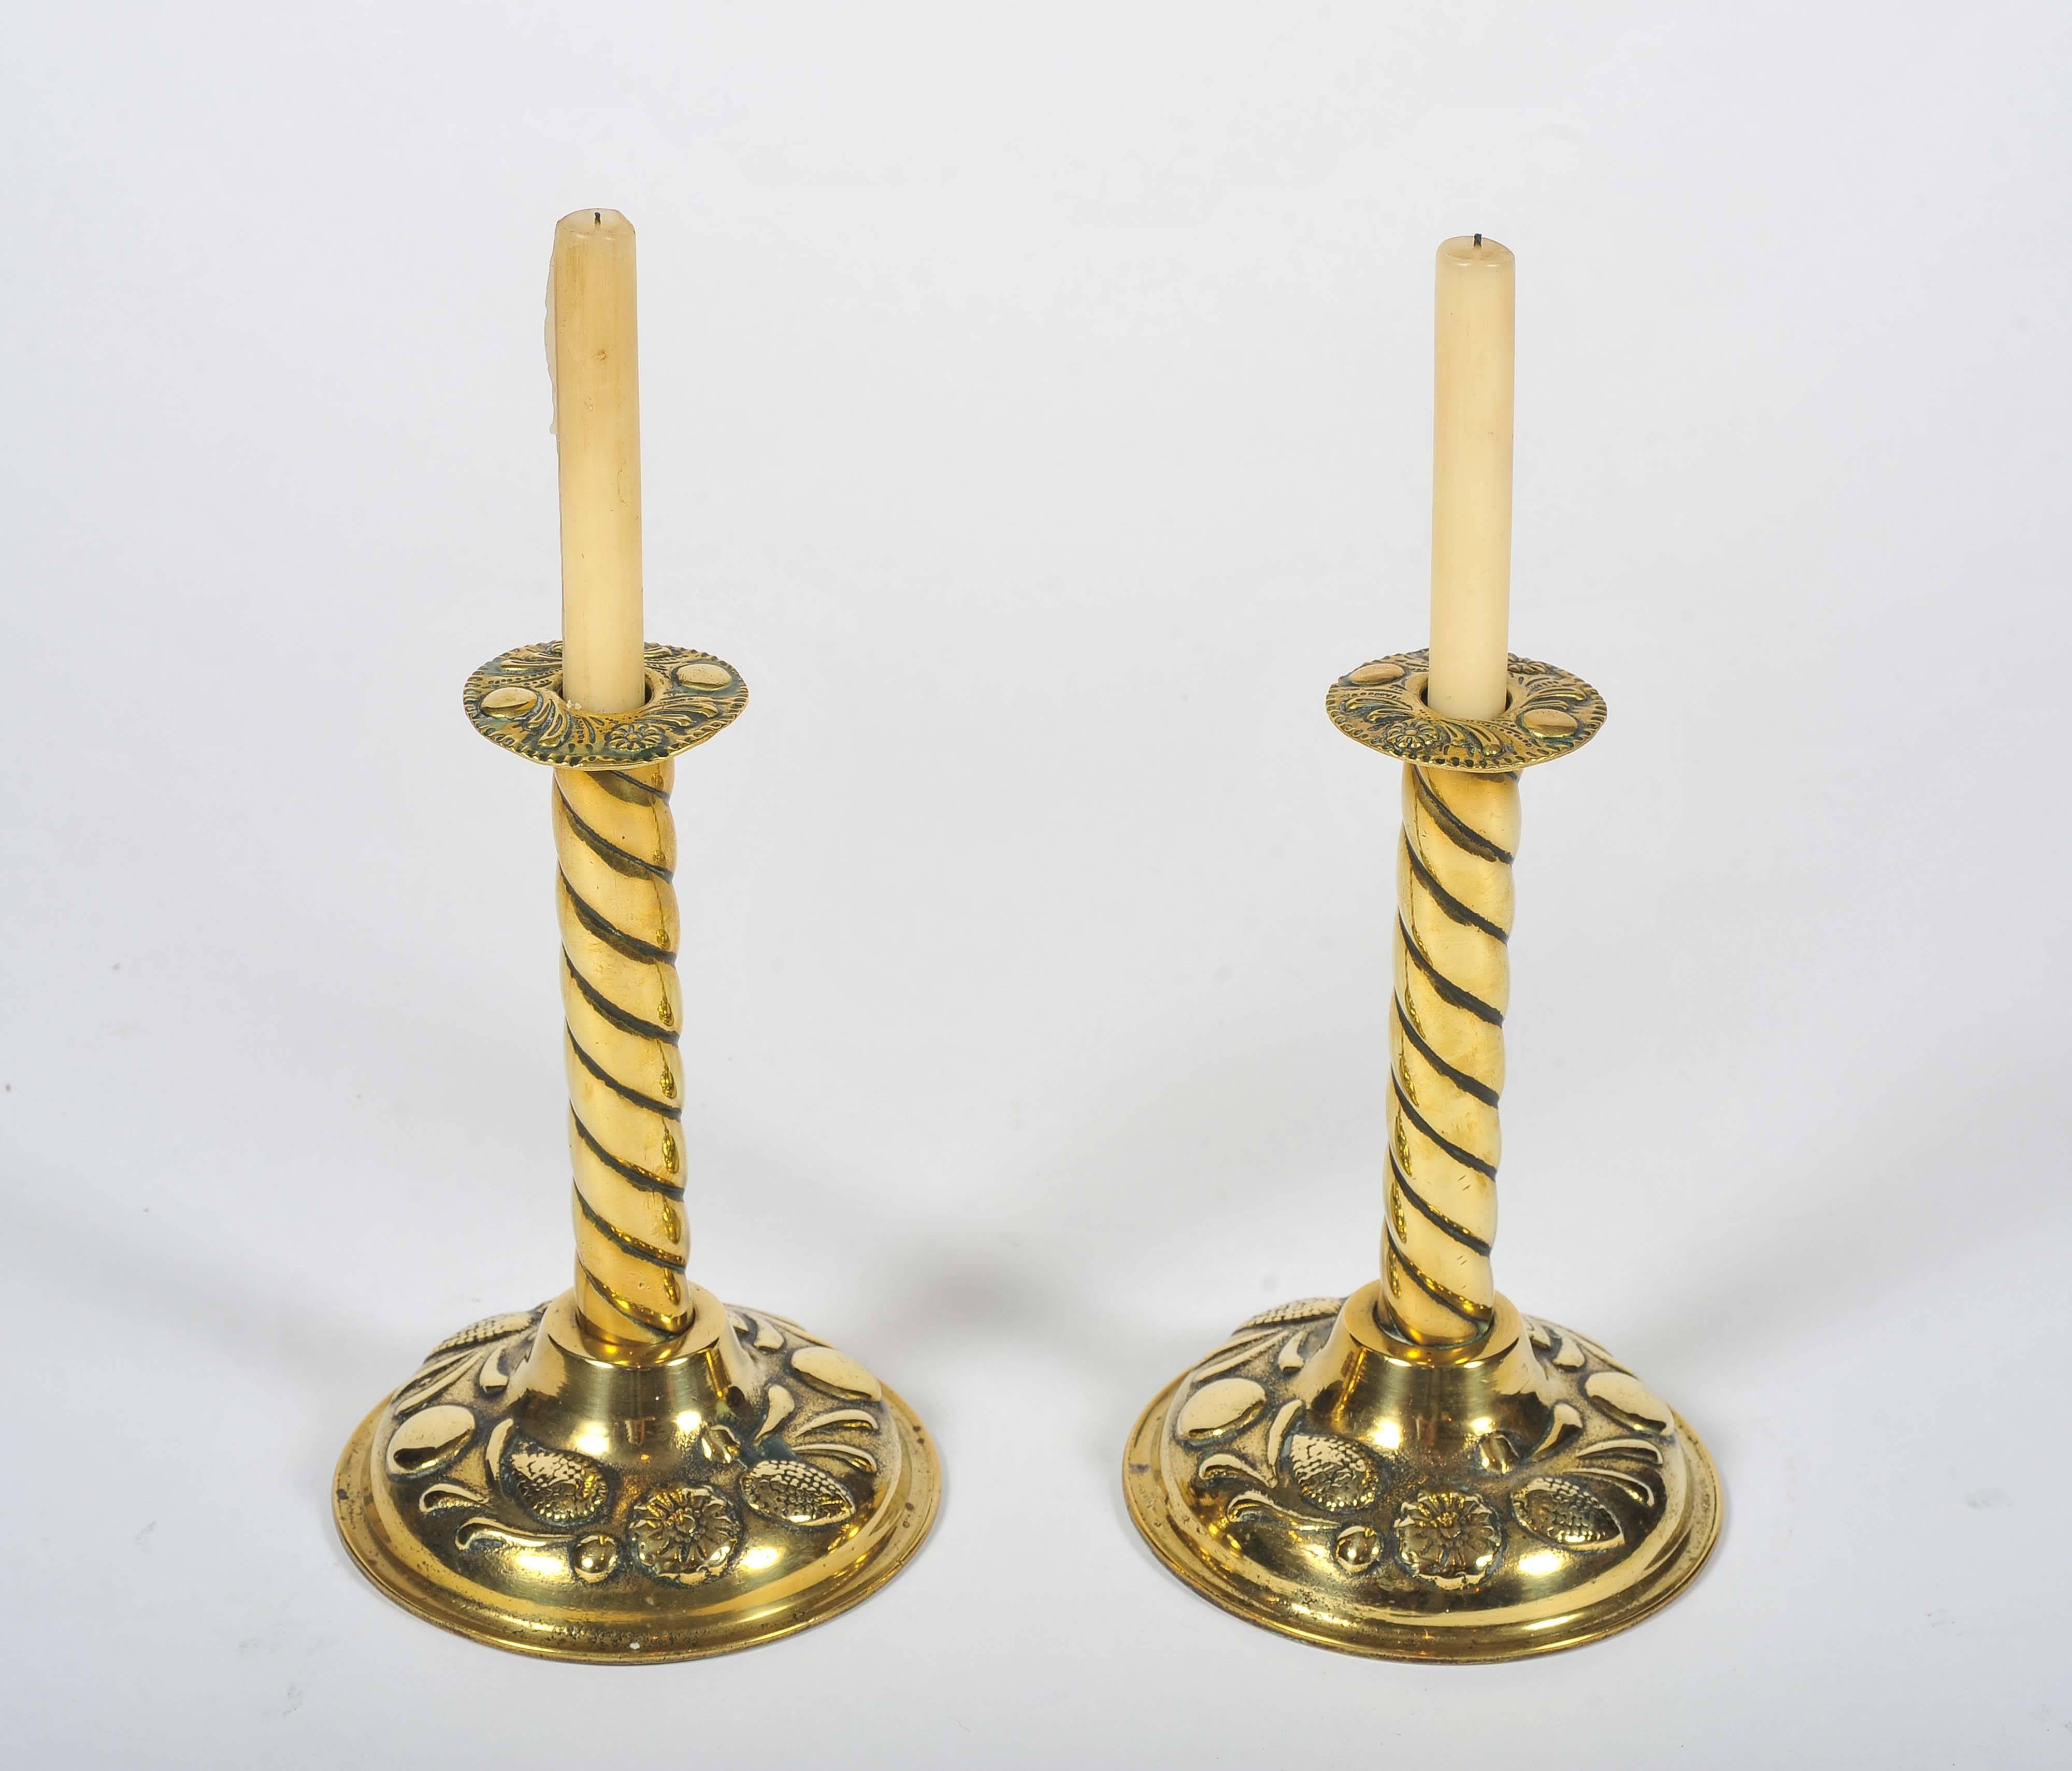 twisted brass candlesticks